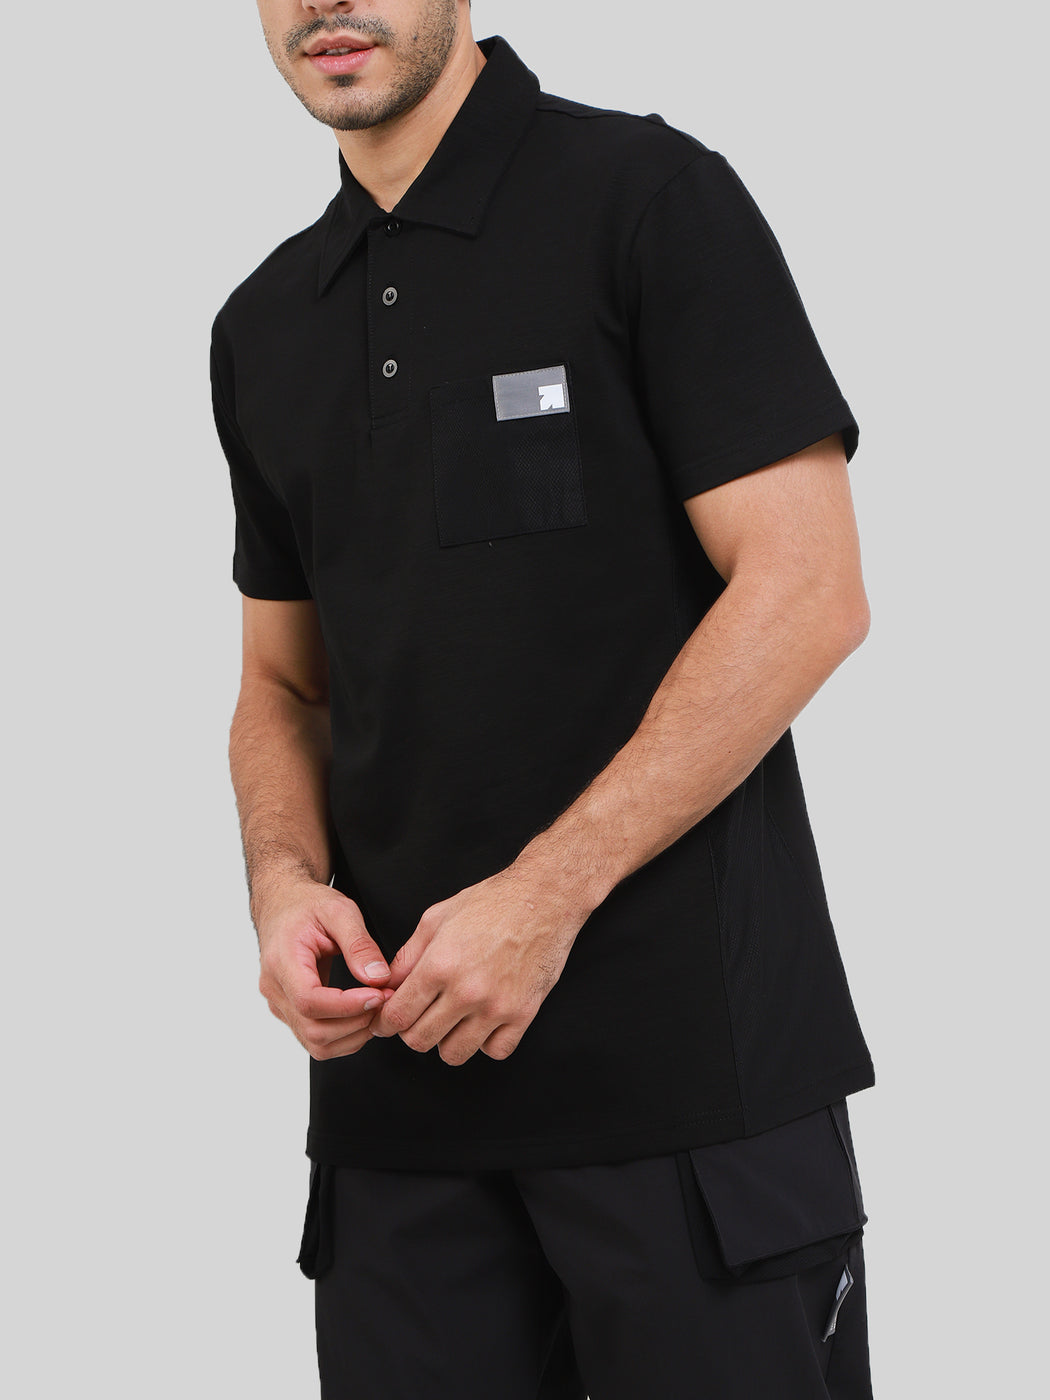 Unisex Ultimate Utilitarian Polo T-shirt Male Black